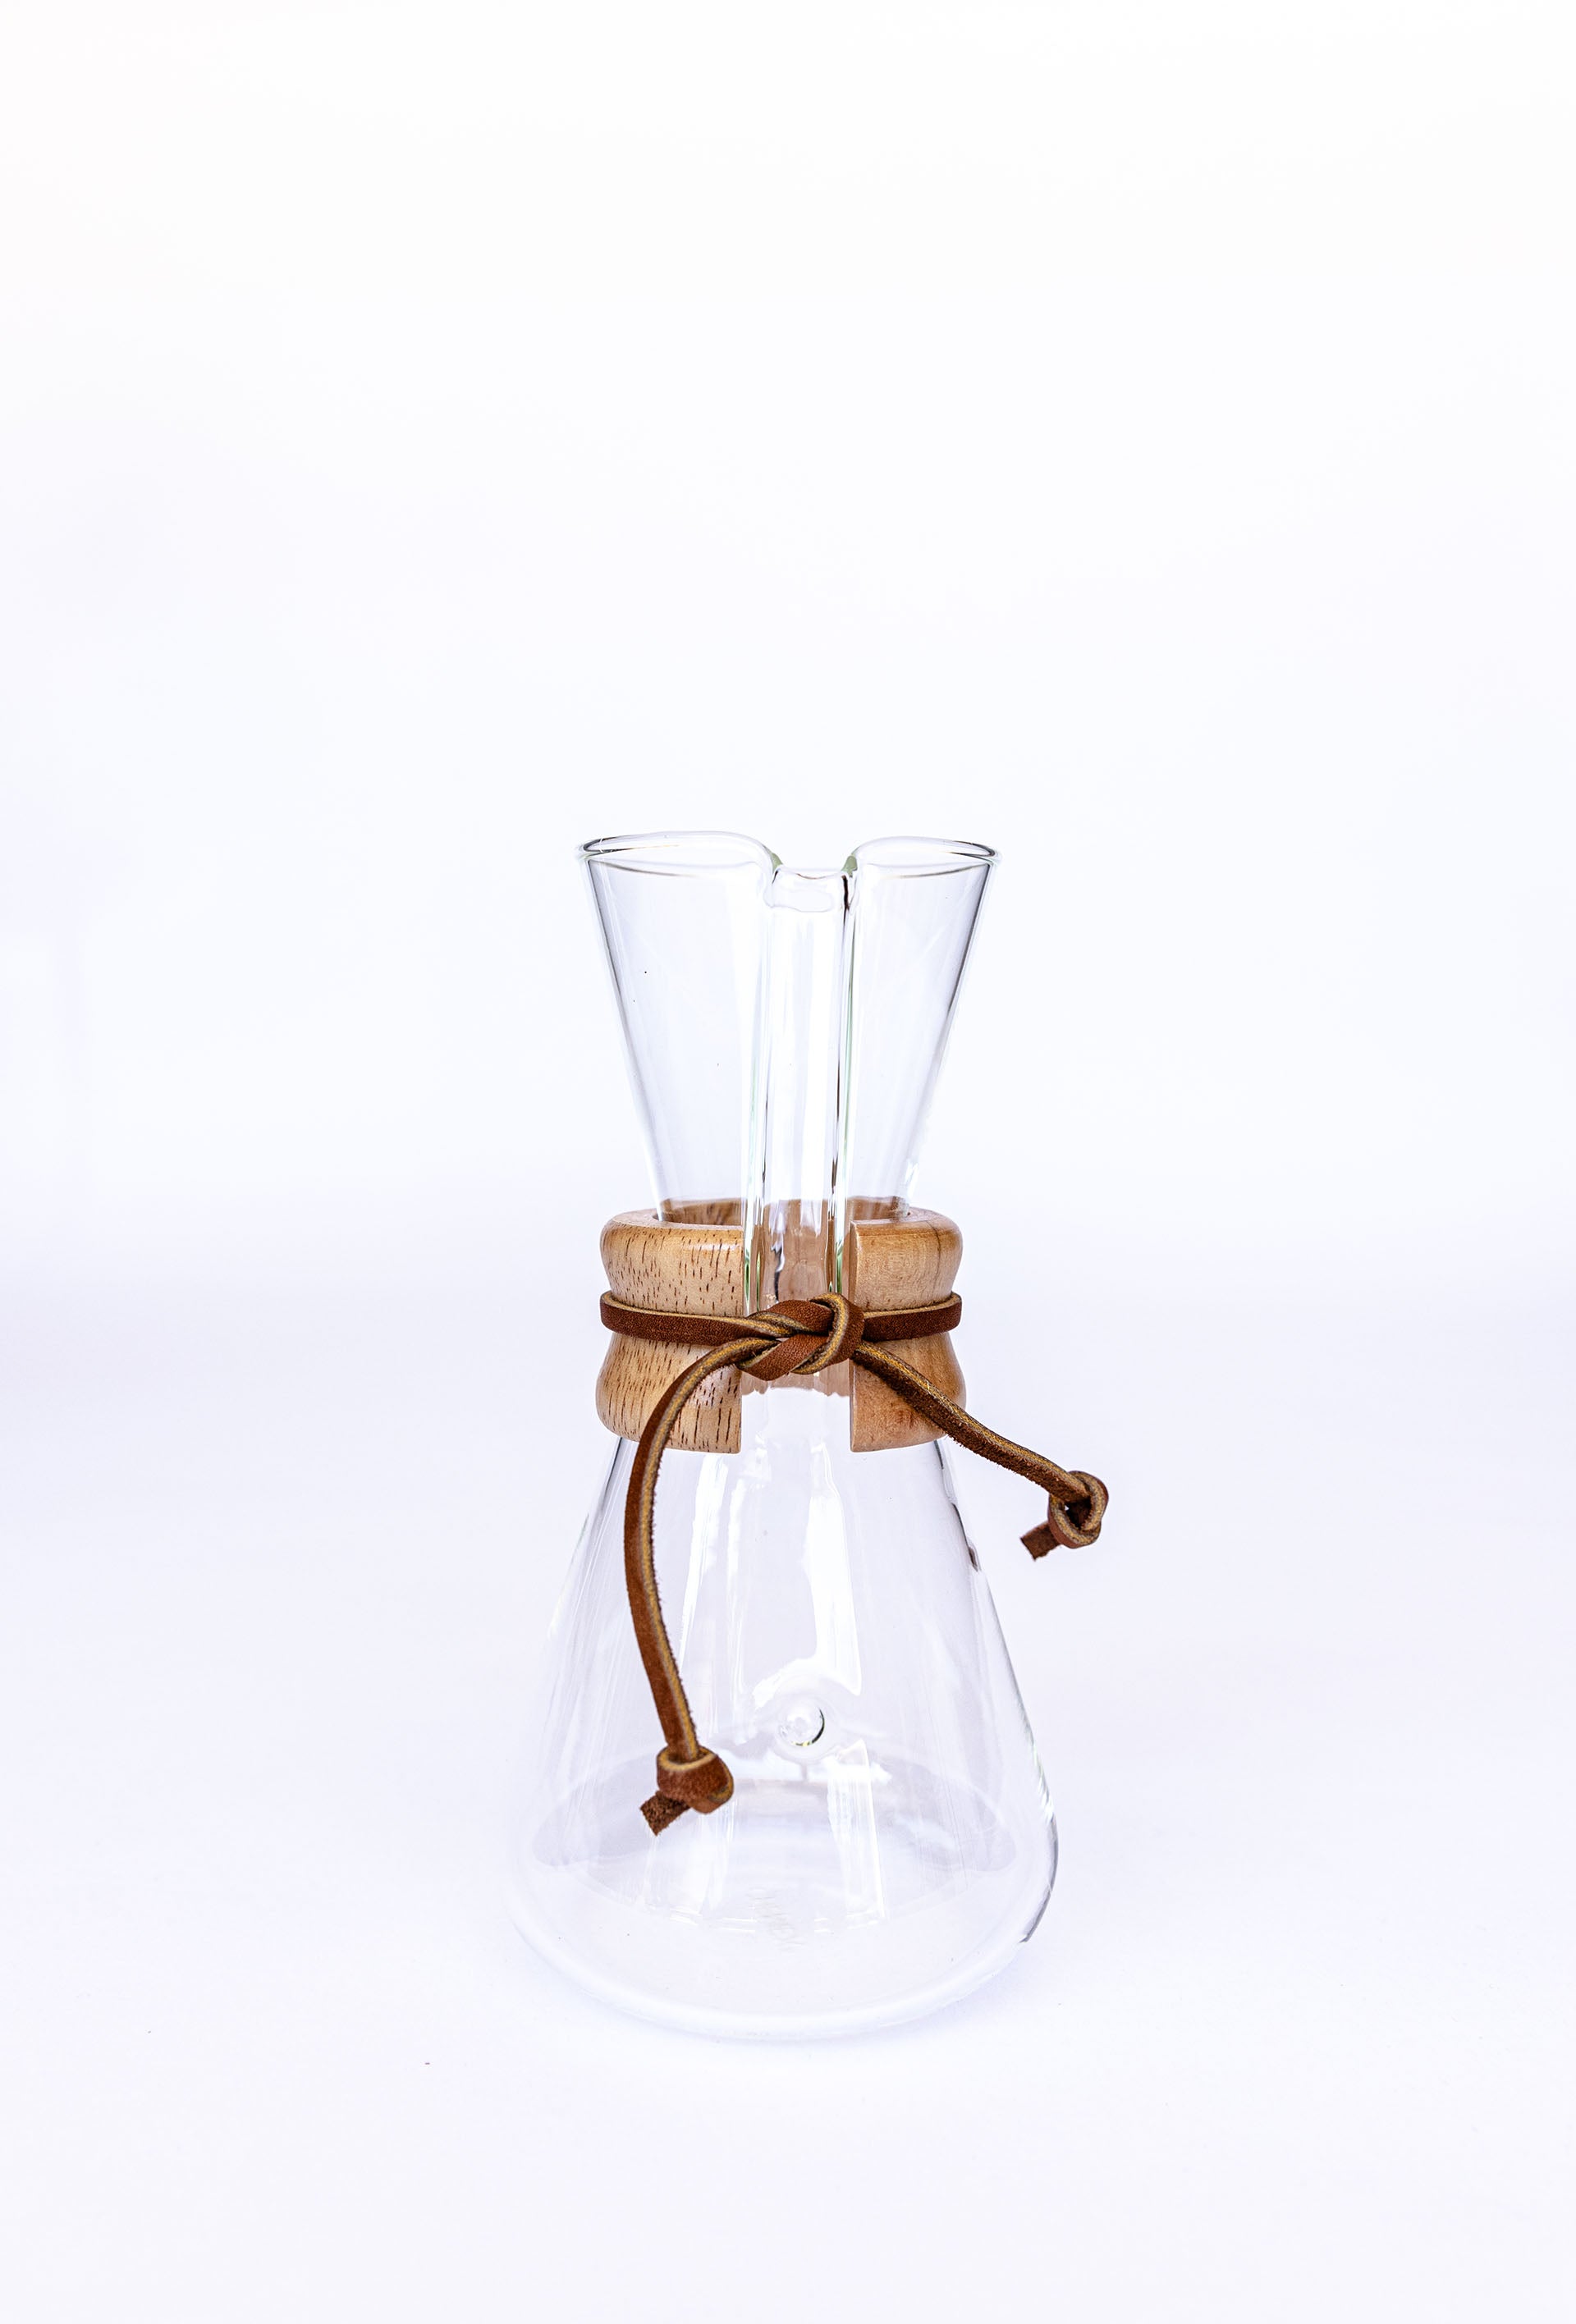 Chemex 3-Cup Coffee Maker - Glass Handle